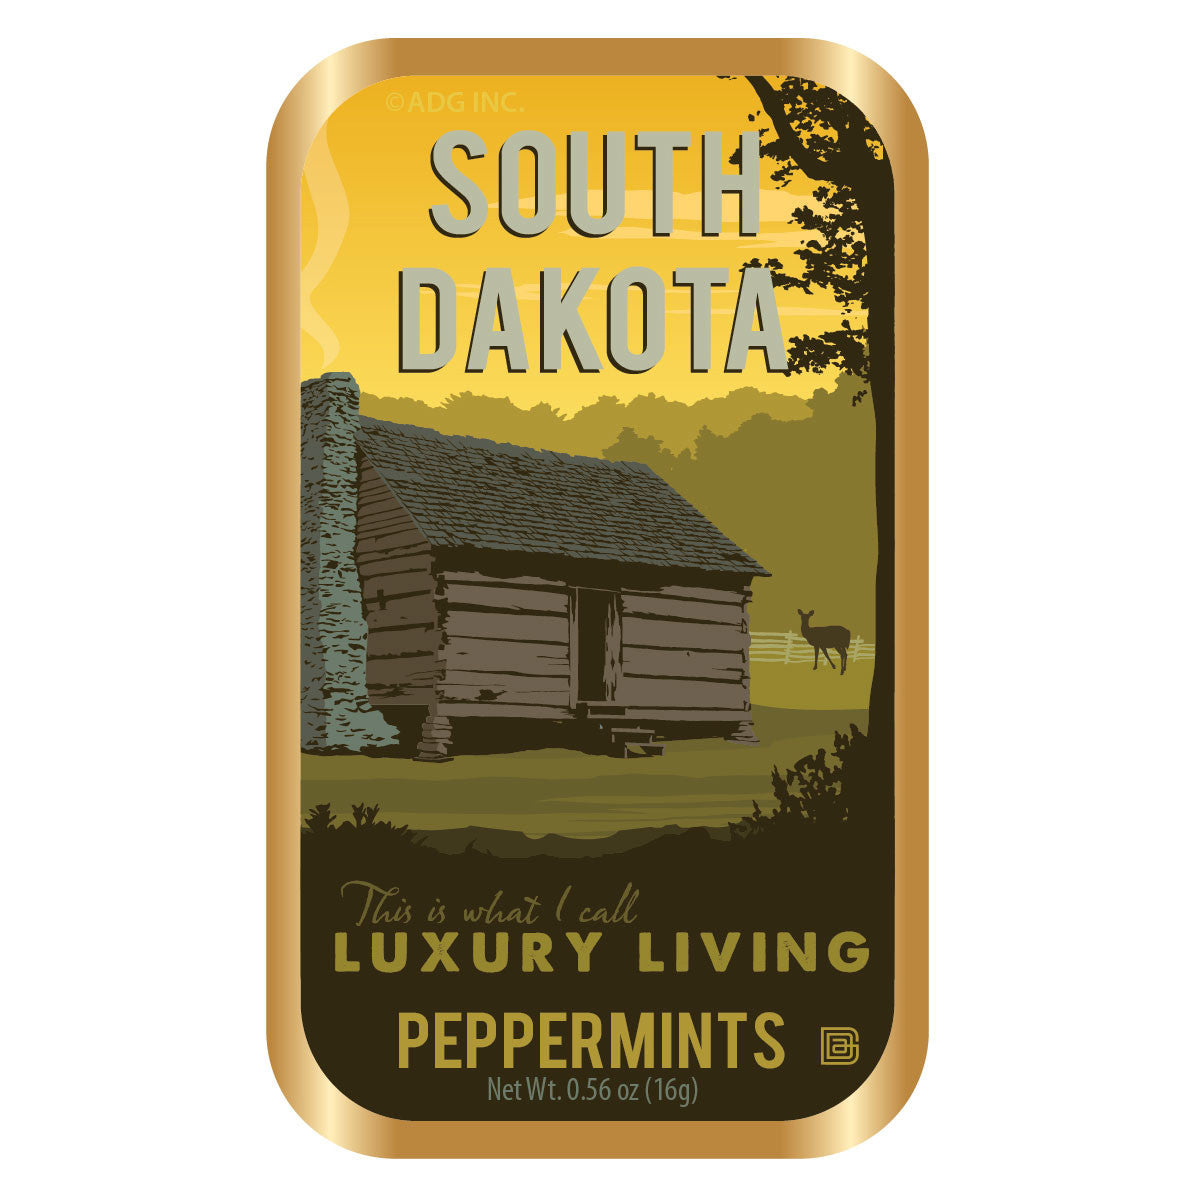 Luxury Living South Dakota - 0930A